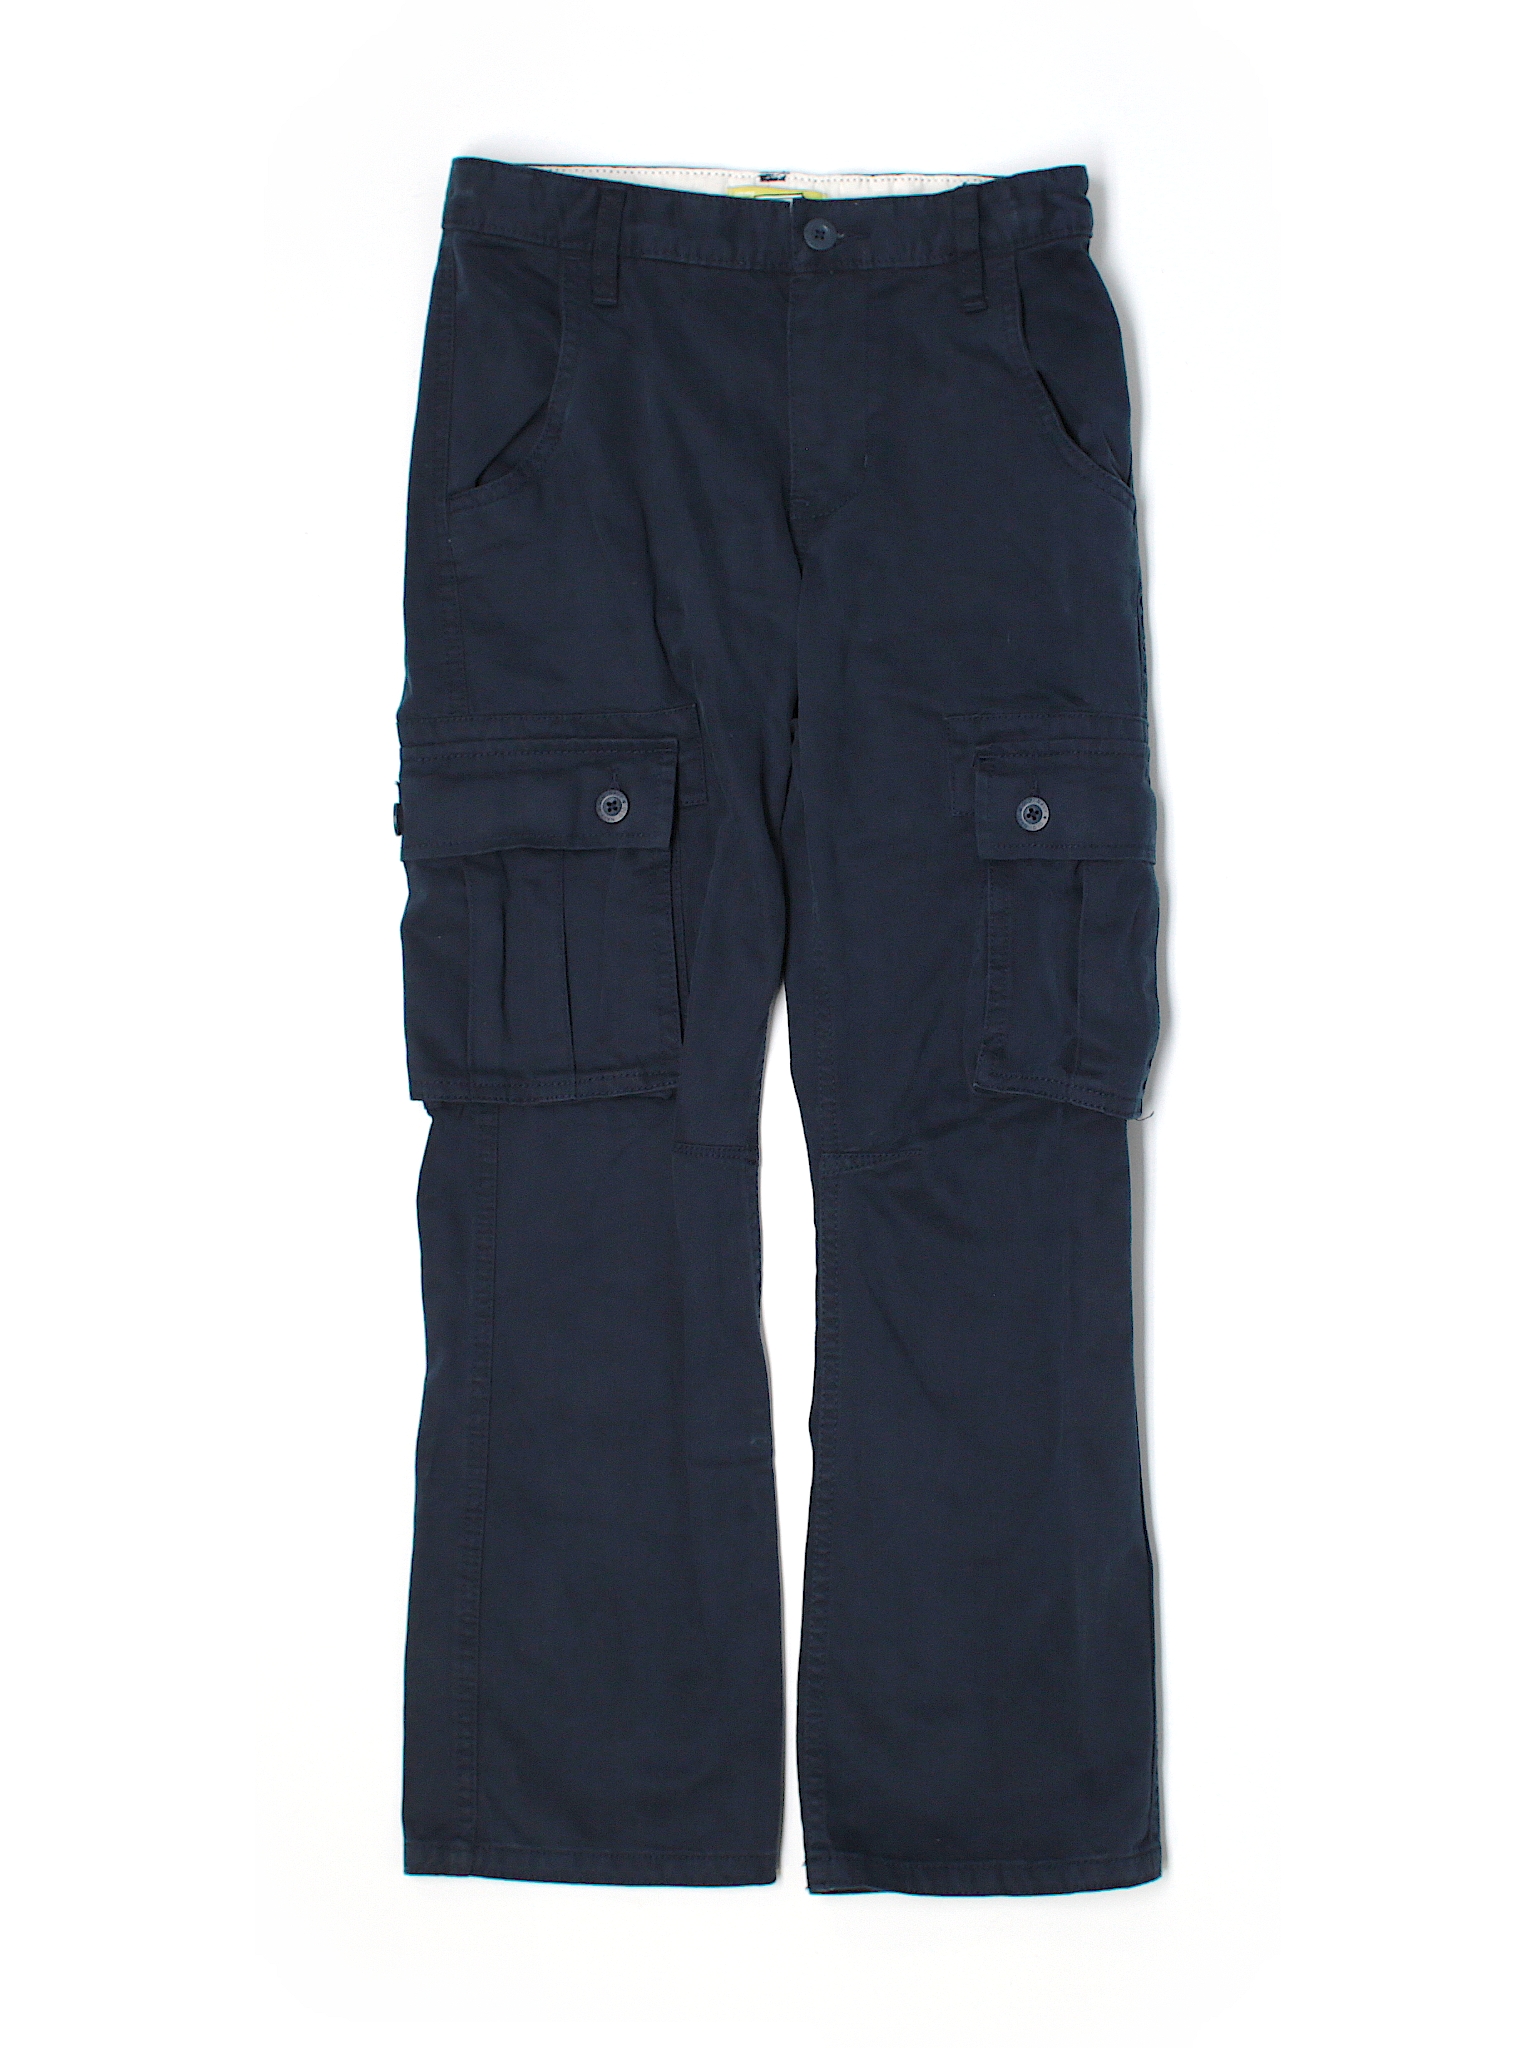 Old Navy Solid Dark Blue Cargo Pants Size 10 - 55% off | thredUP